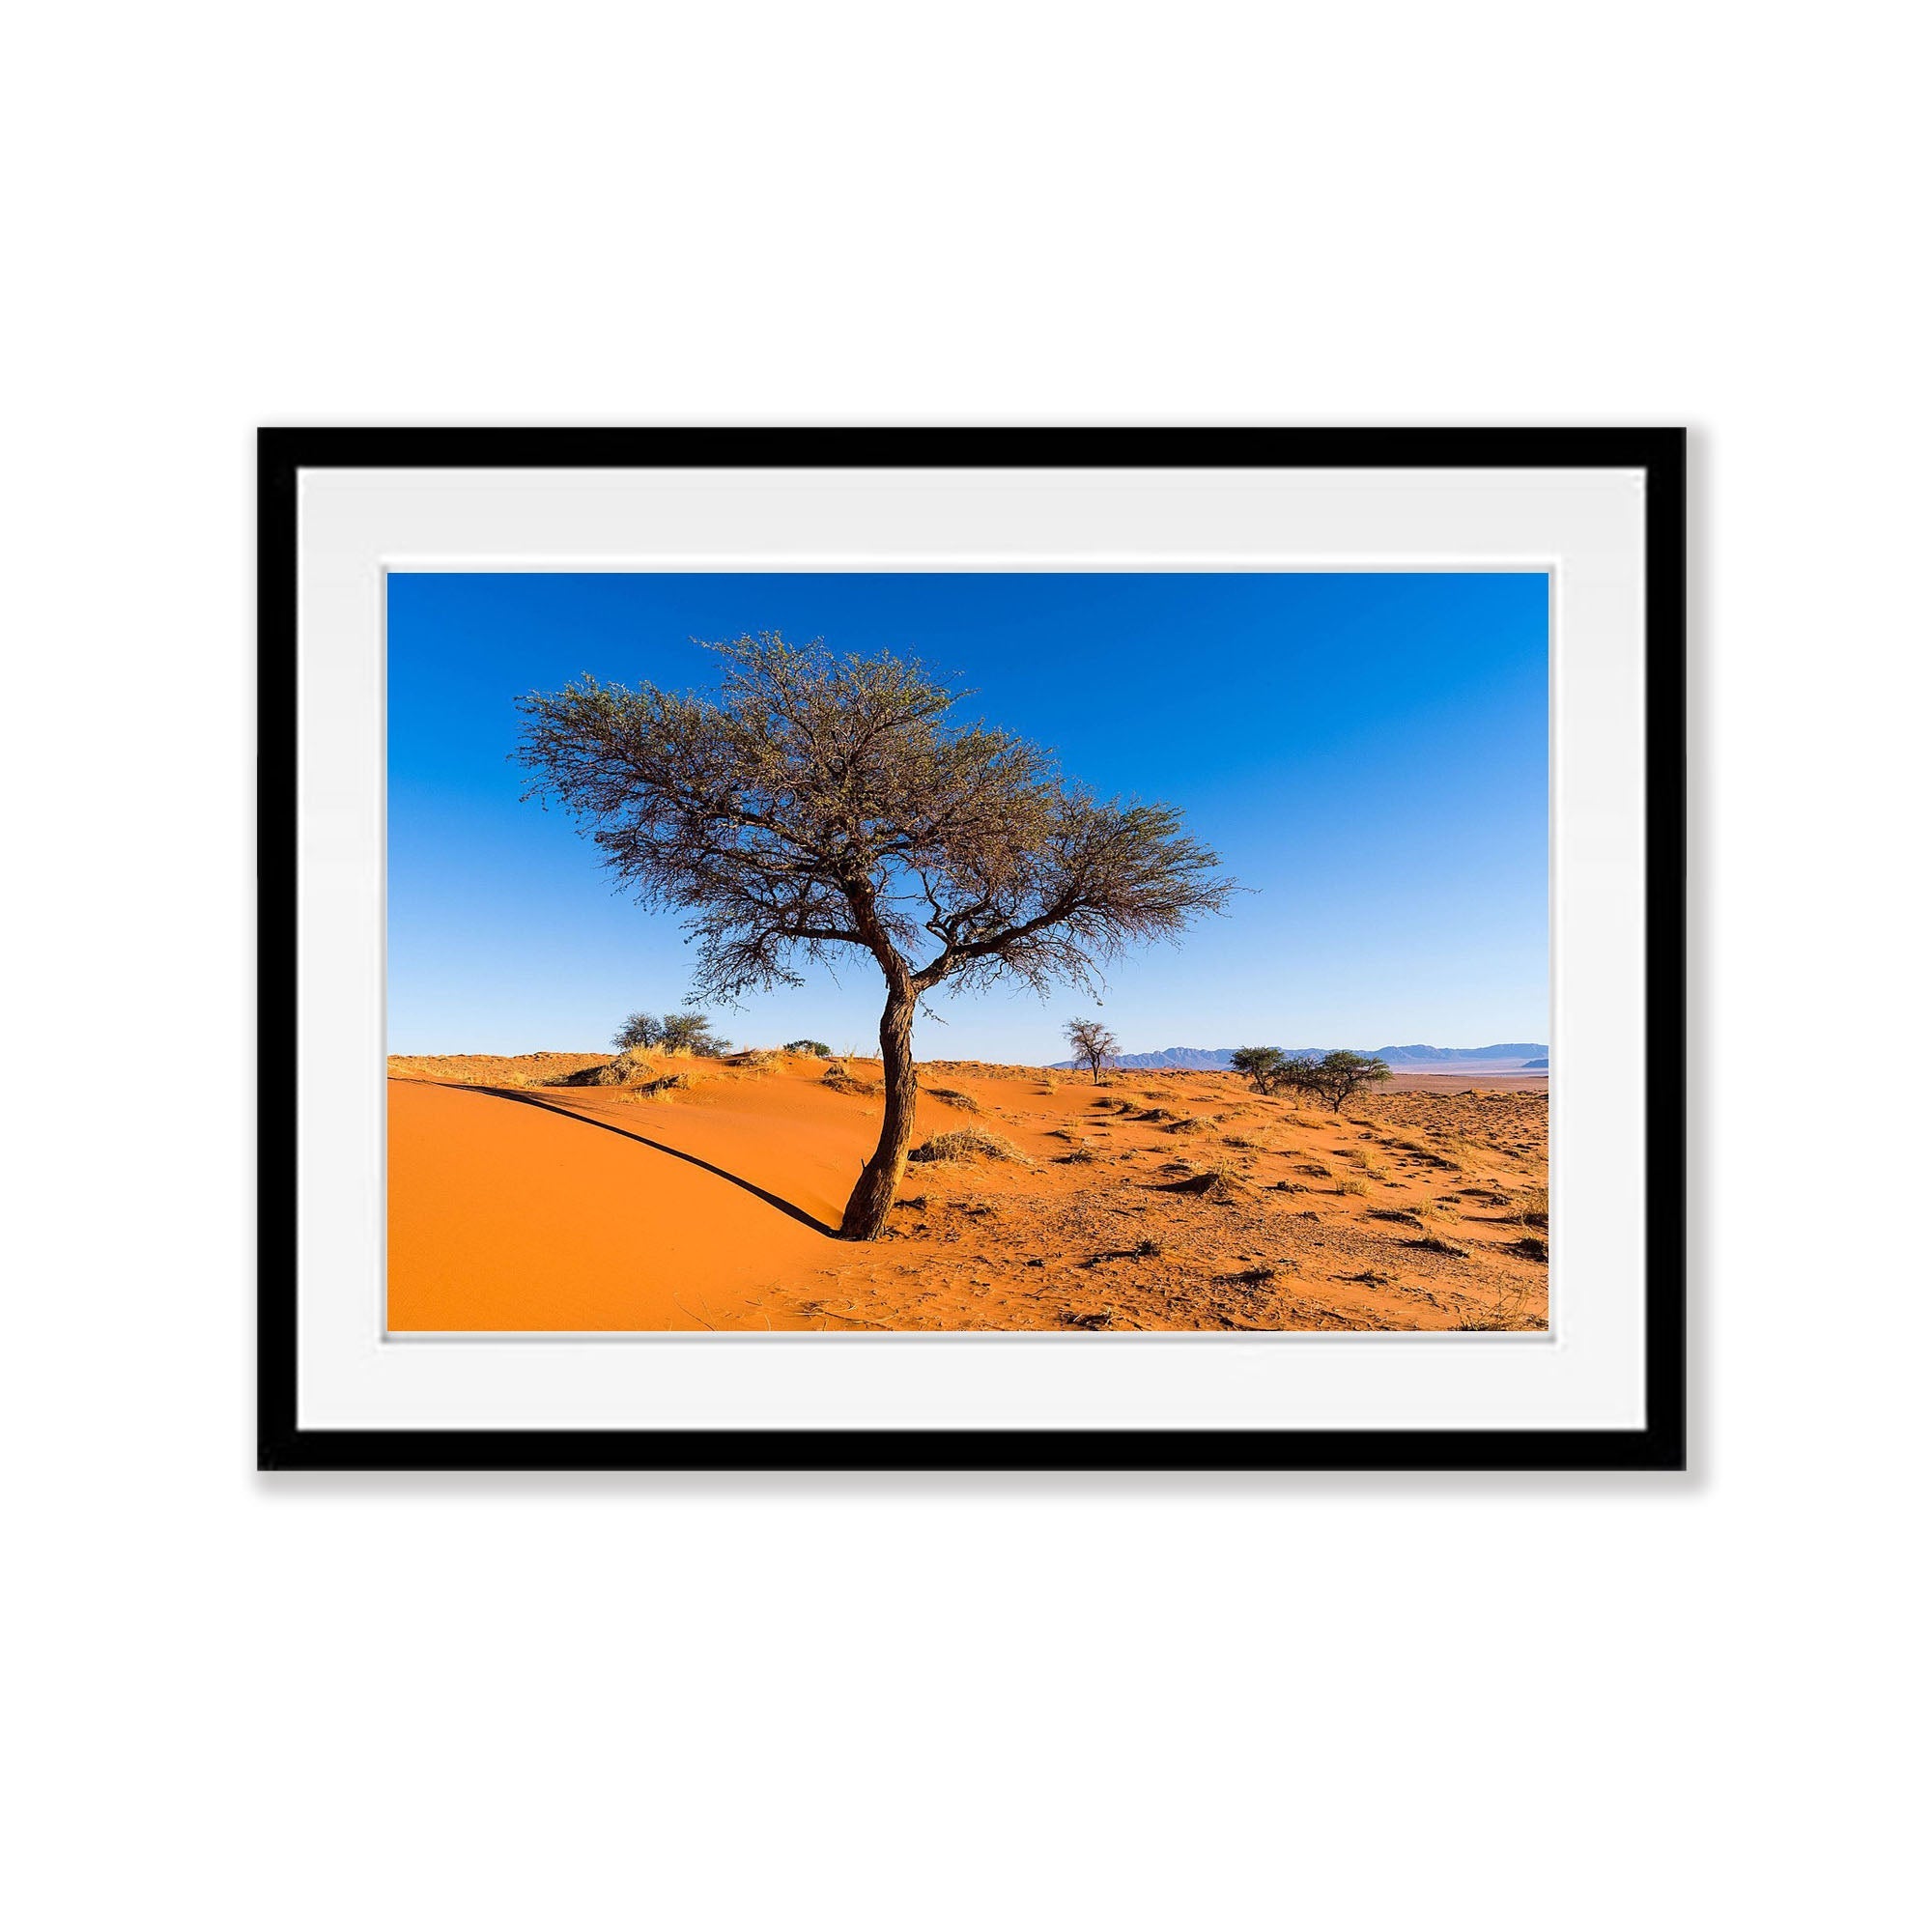 Namibia #31, Africa